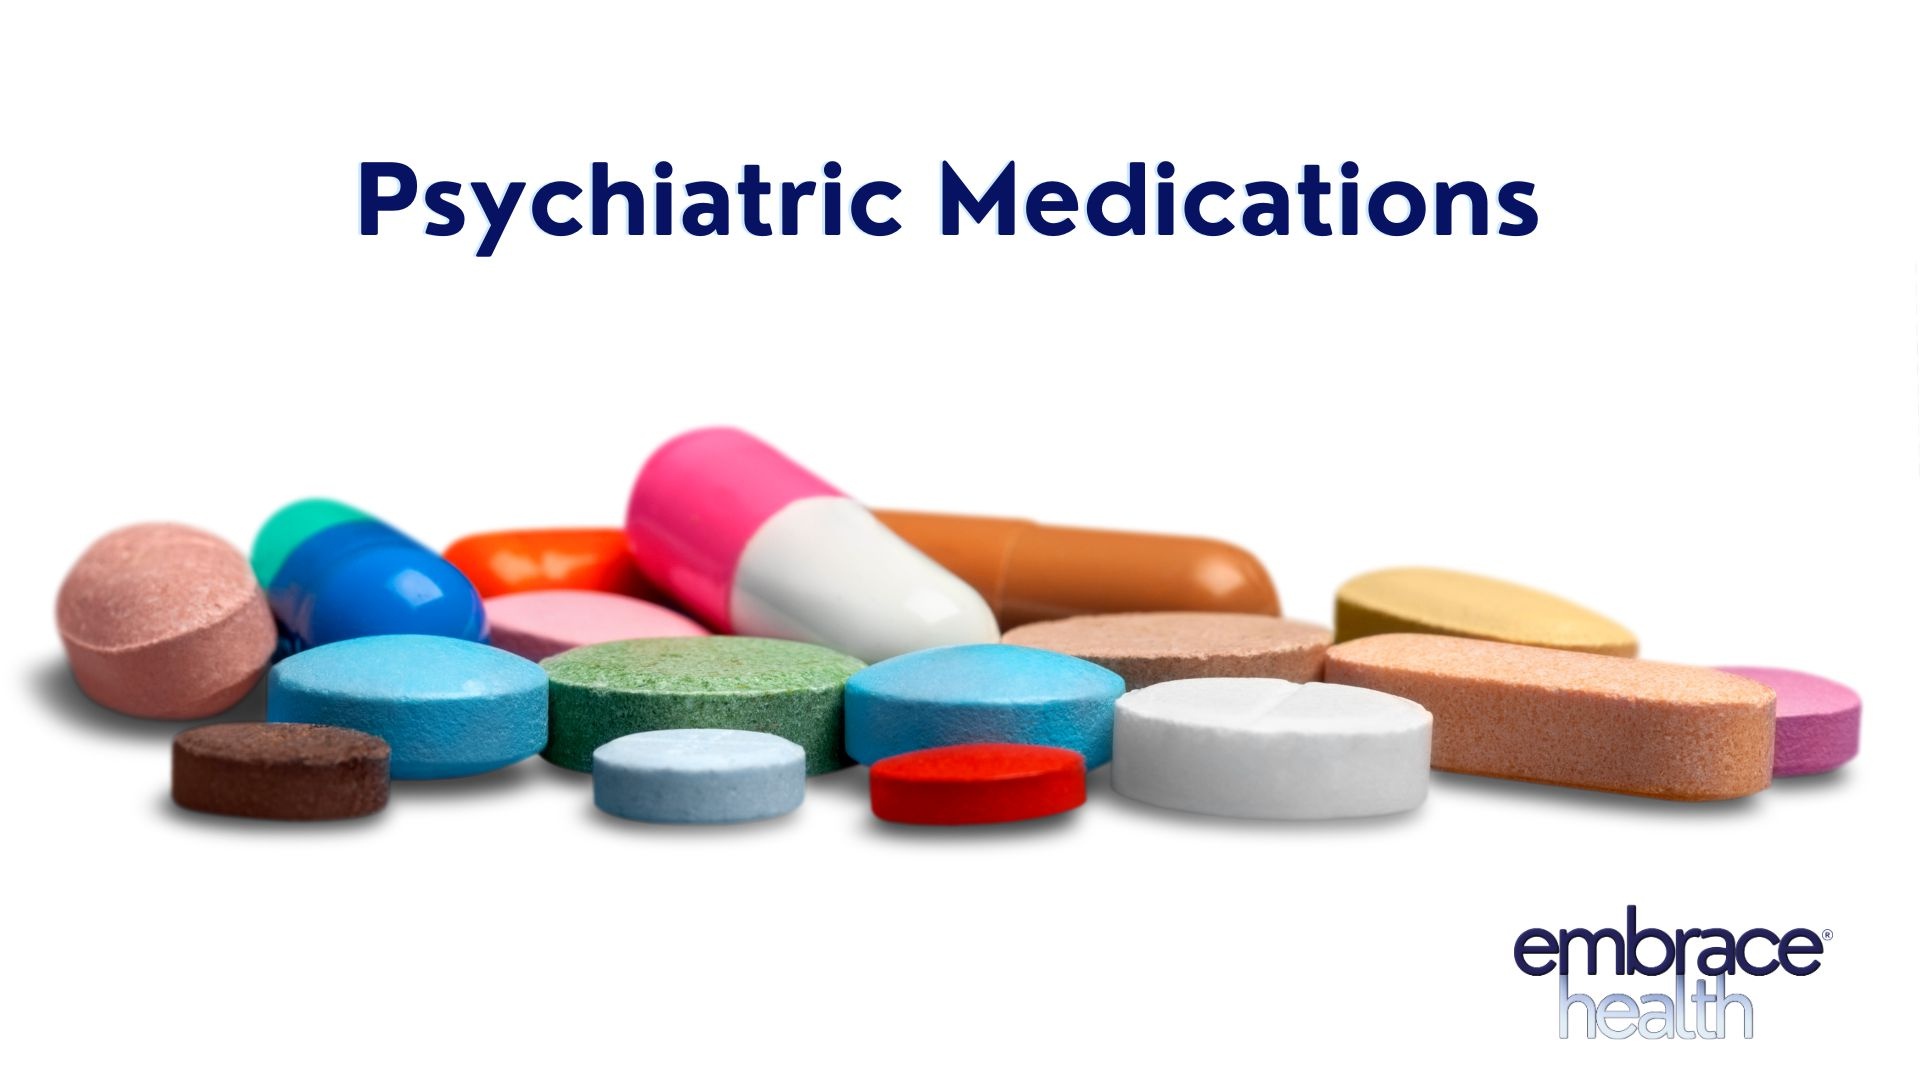 What Drugs Do Psychiatrists Prescribe?